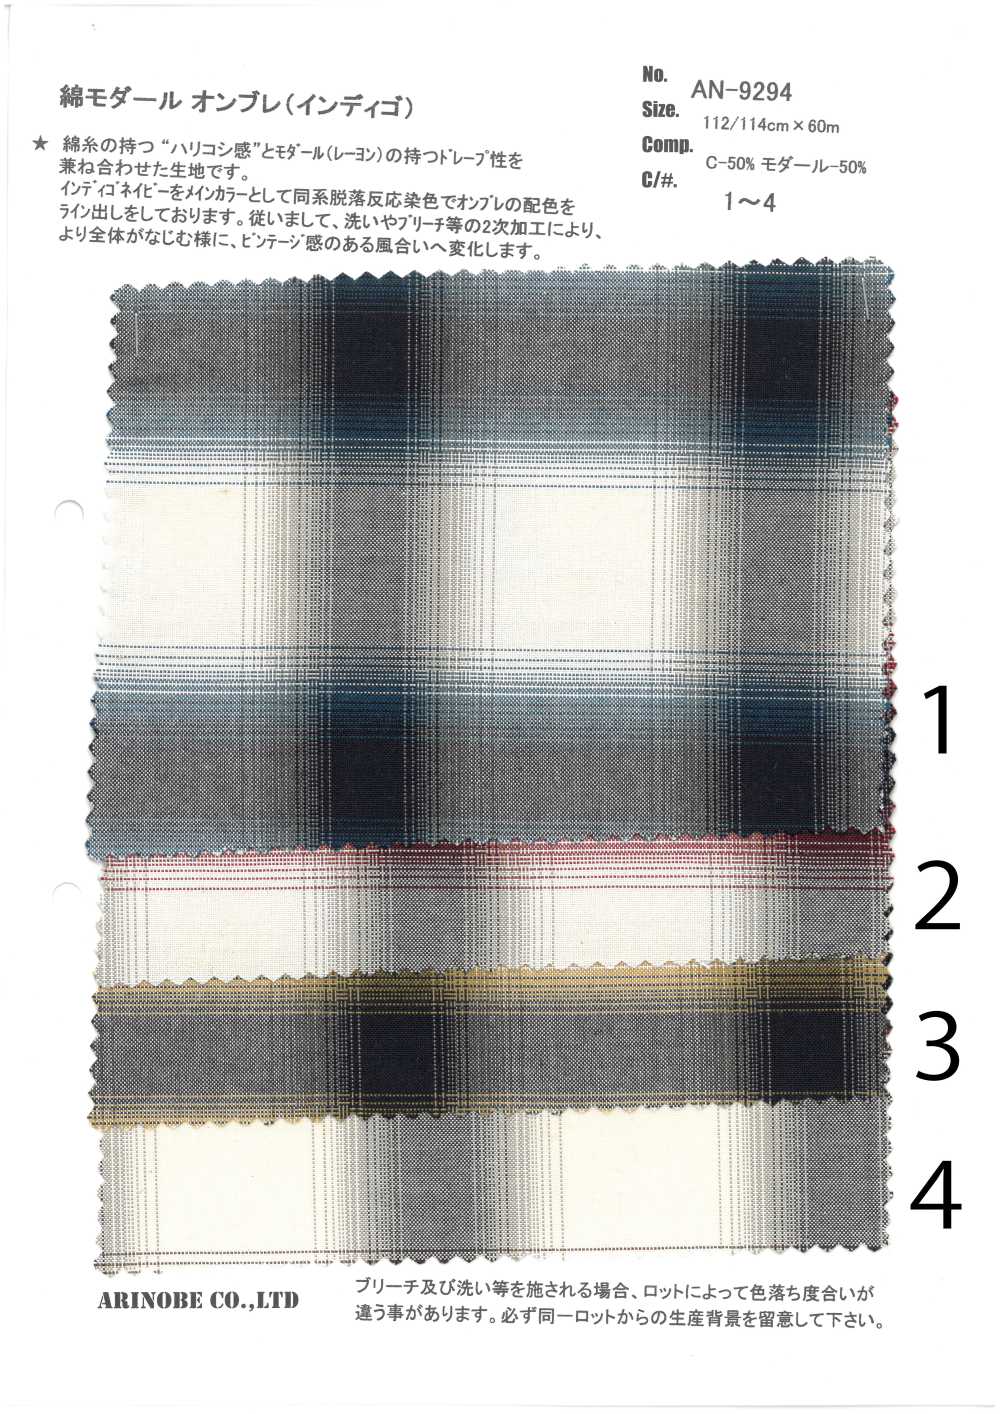 AN-9294 Indaco Cotton Modal Ombre[Tessile / Tessuto] ARINOBE CO., LTD.